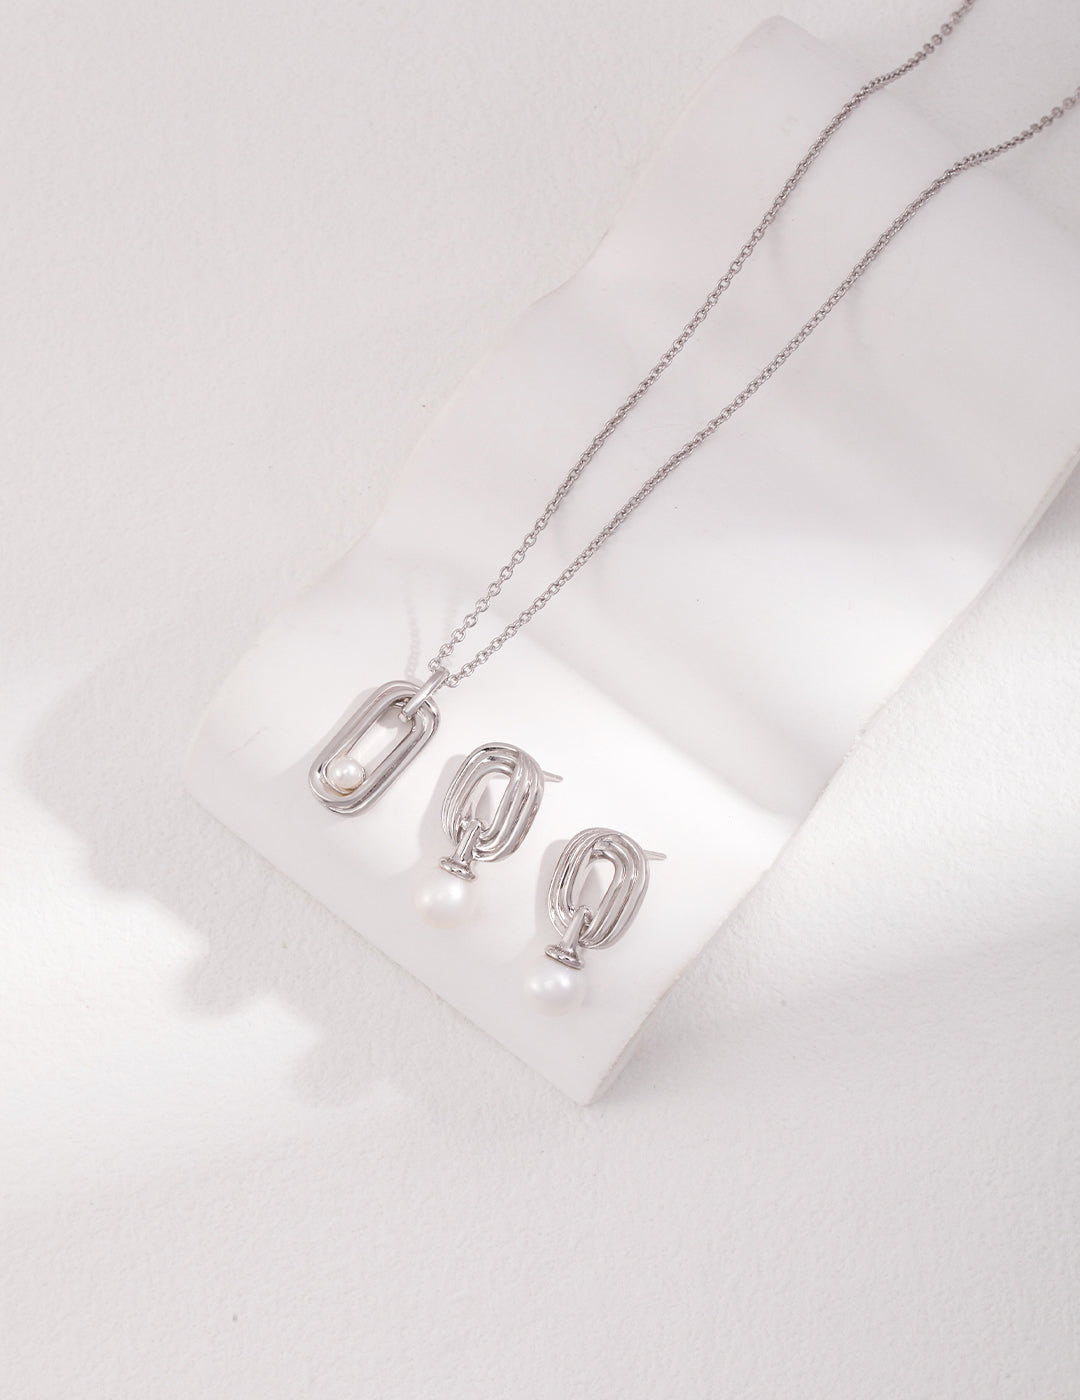 Silver & Pearl Necklace & Earrings